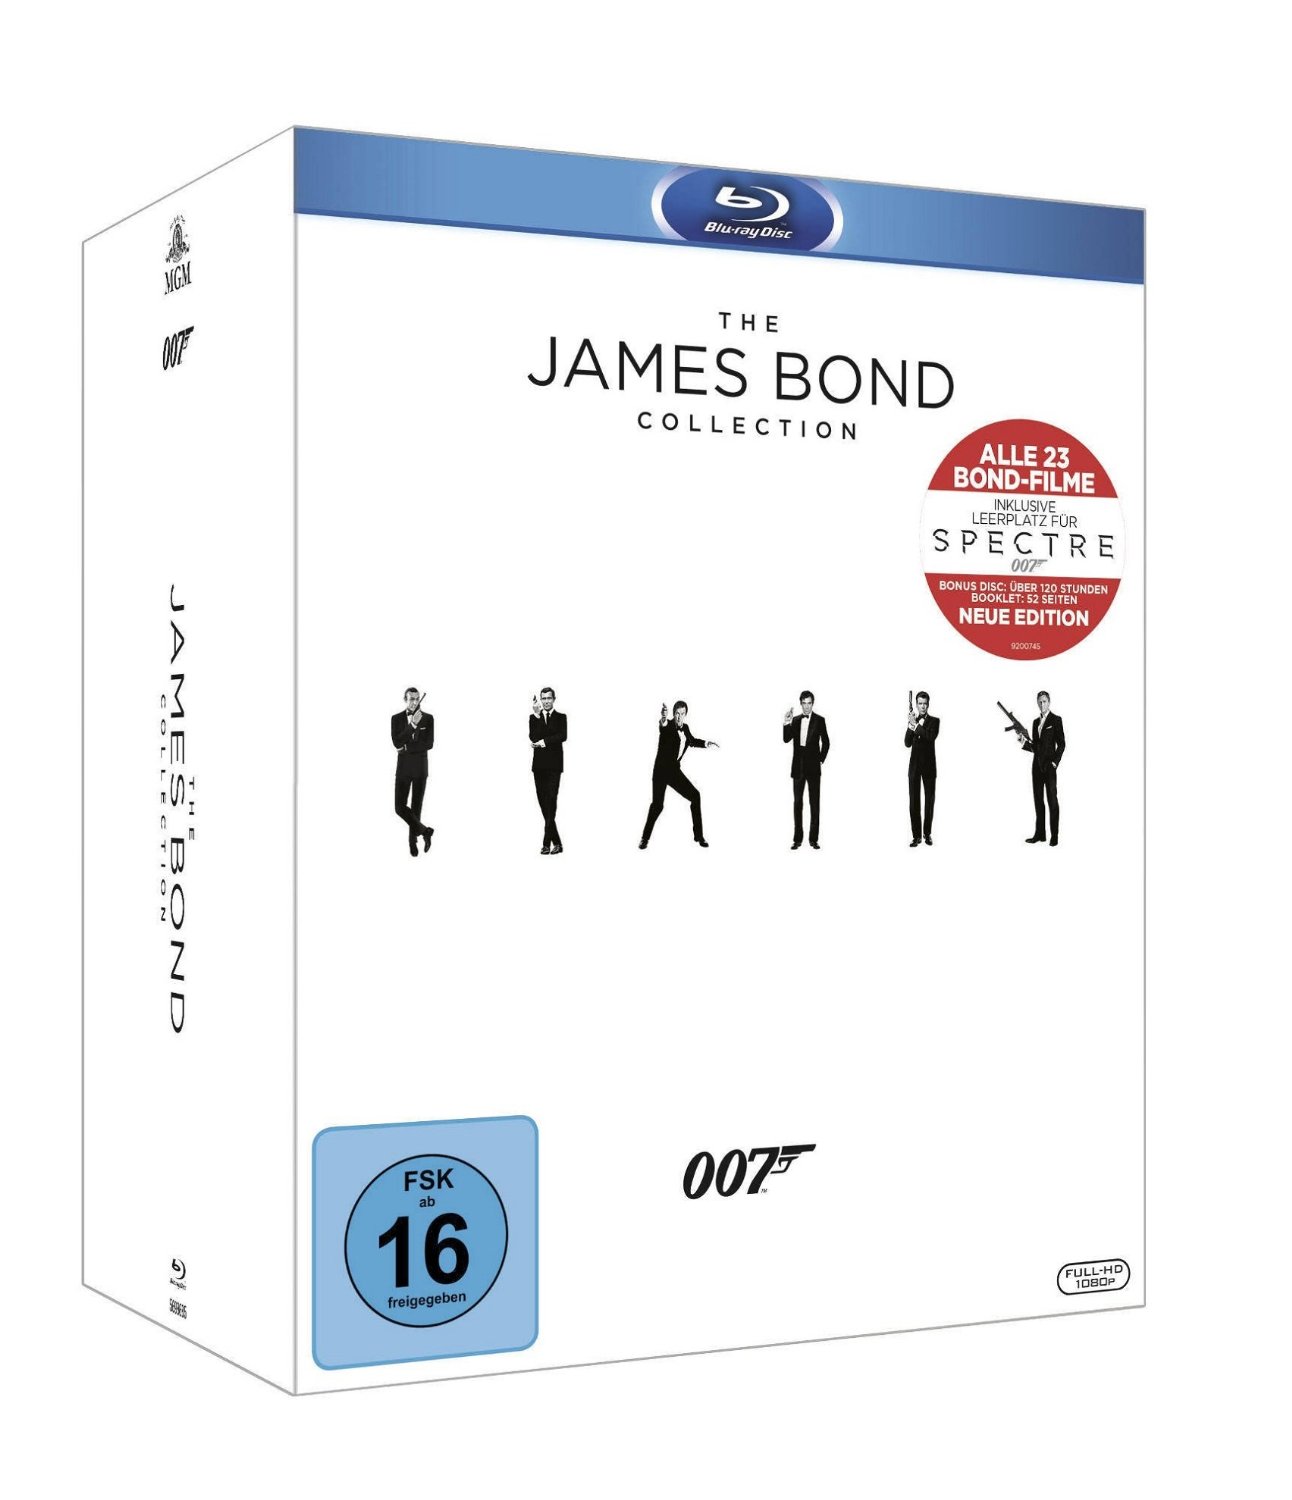 James Bond Collection